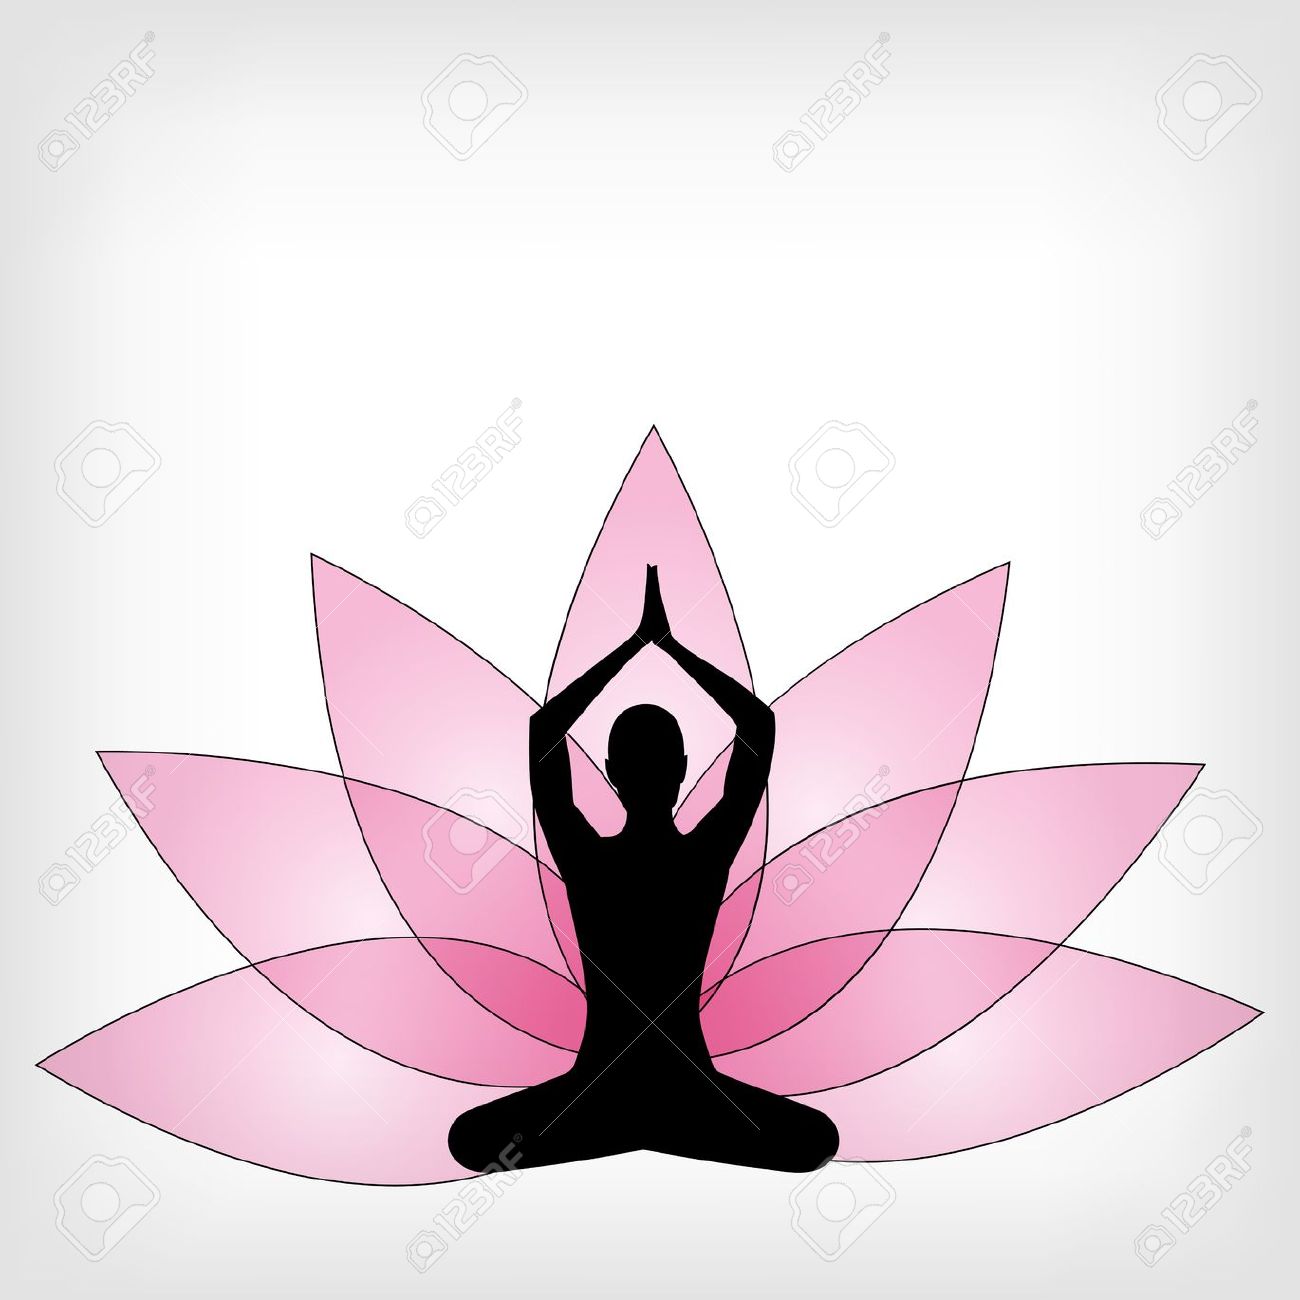 free yoga clipart downloads - photo #44